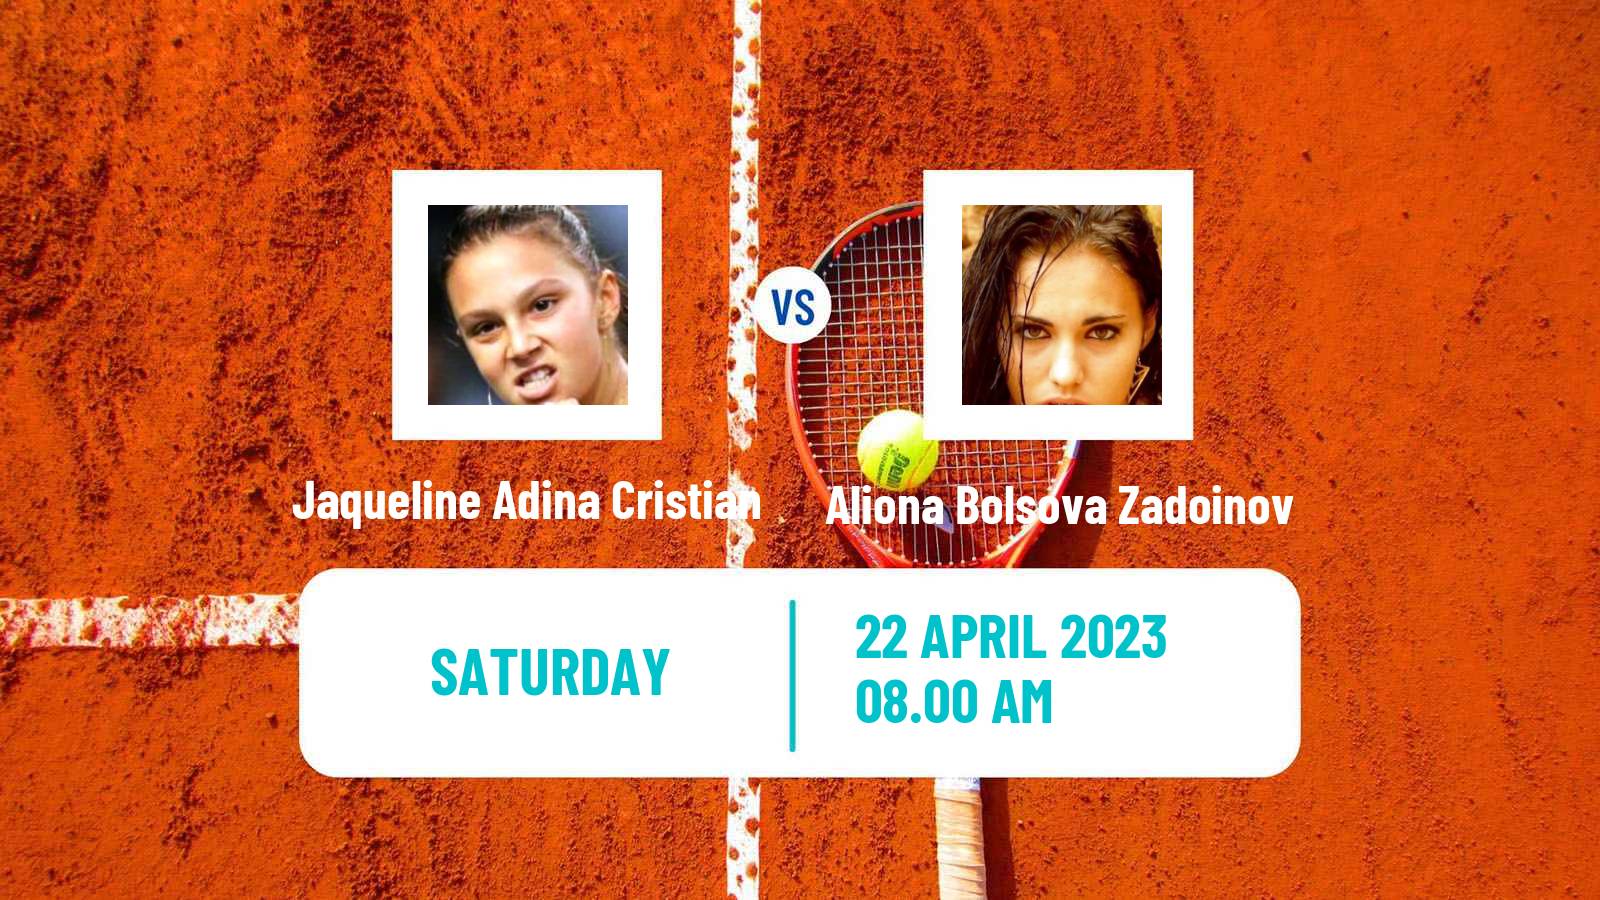 Tennis ITF Tournaments Jaqueline Adina Cristian - Aliona Bolsova Zadoinov